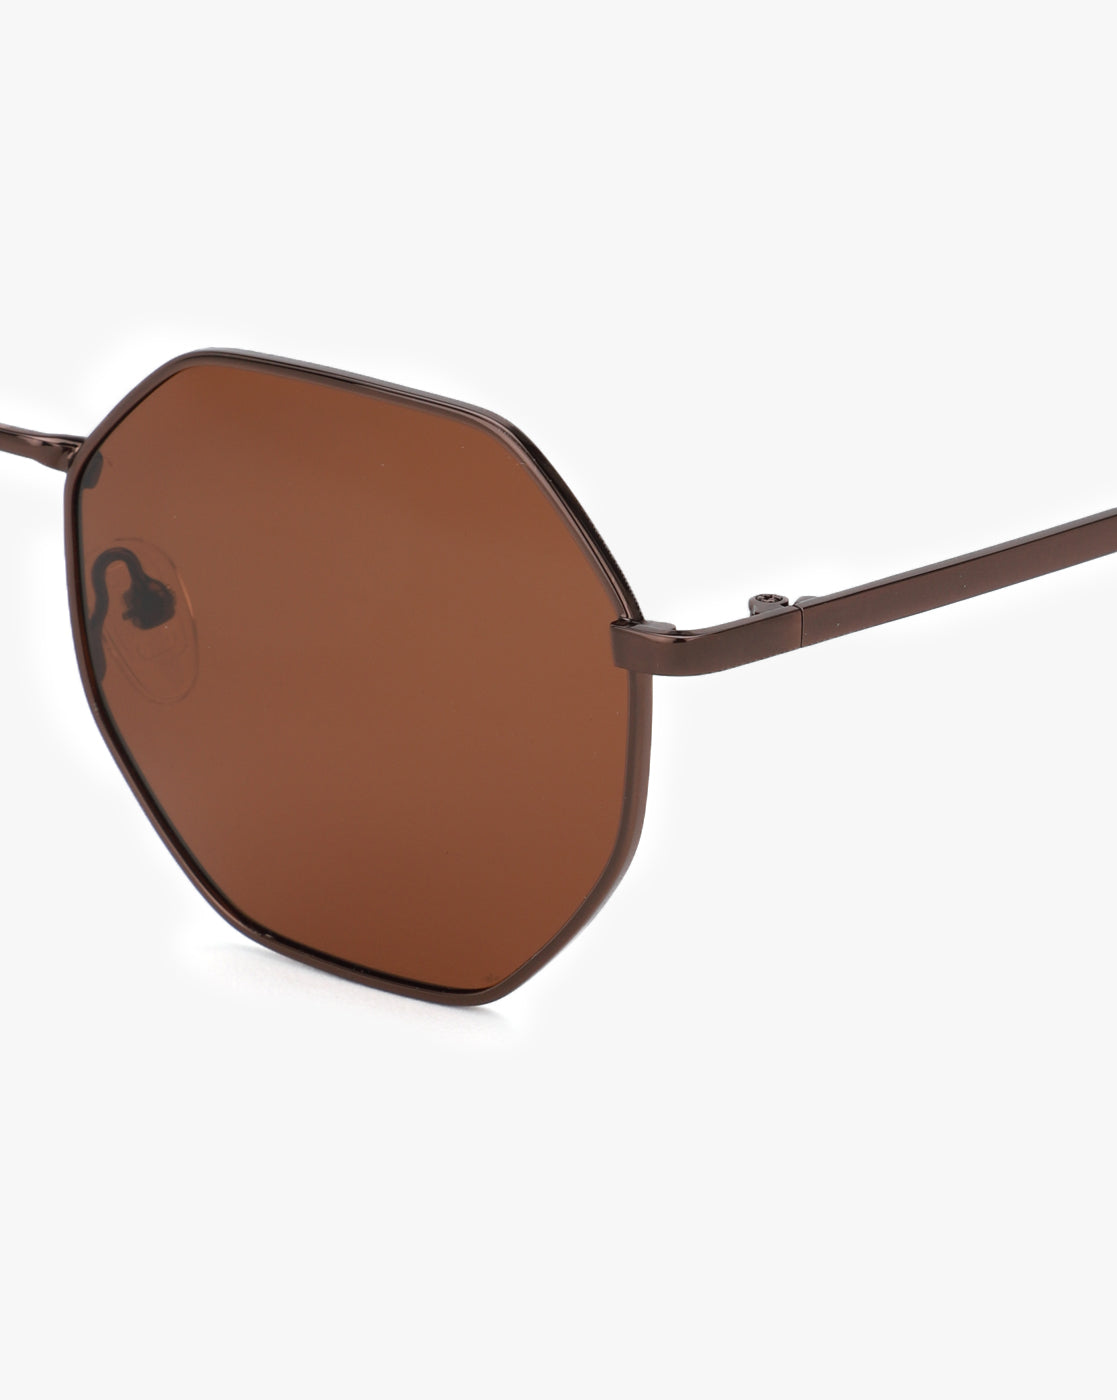 Carlton London Polarised Other Sunglasses For Men